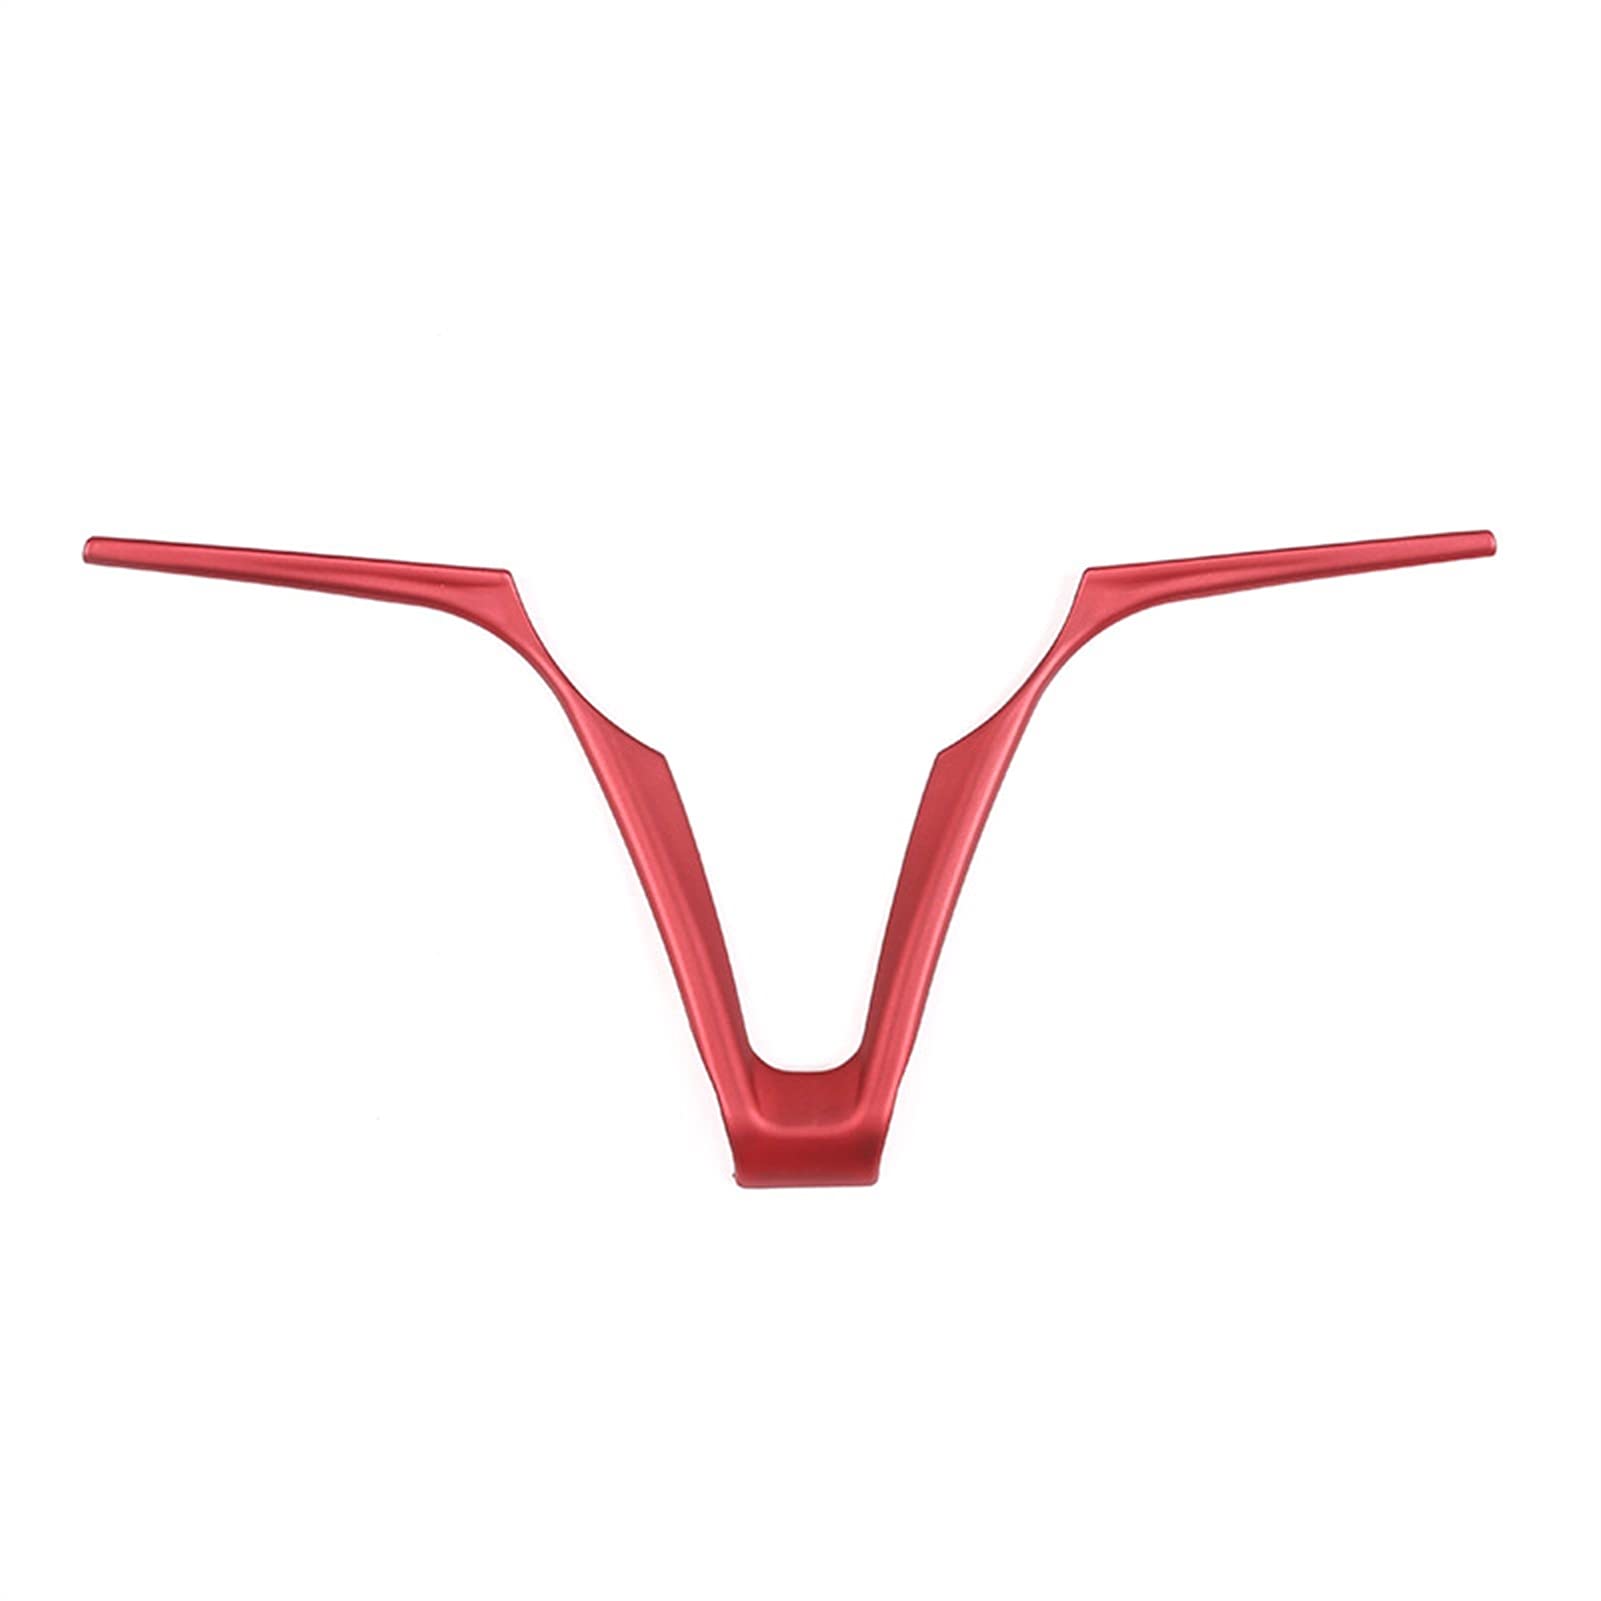 Auto-Lenkrad, V-Form, Karbonfaser-Stil, ABS-Kunststoff, Dekoration für Stelvio Giulia (Onecolor) Rot von Generisch